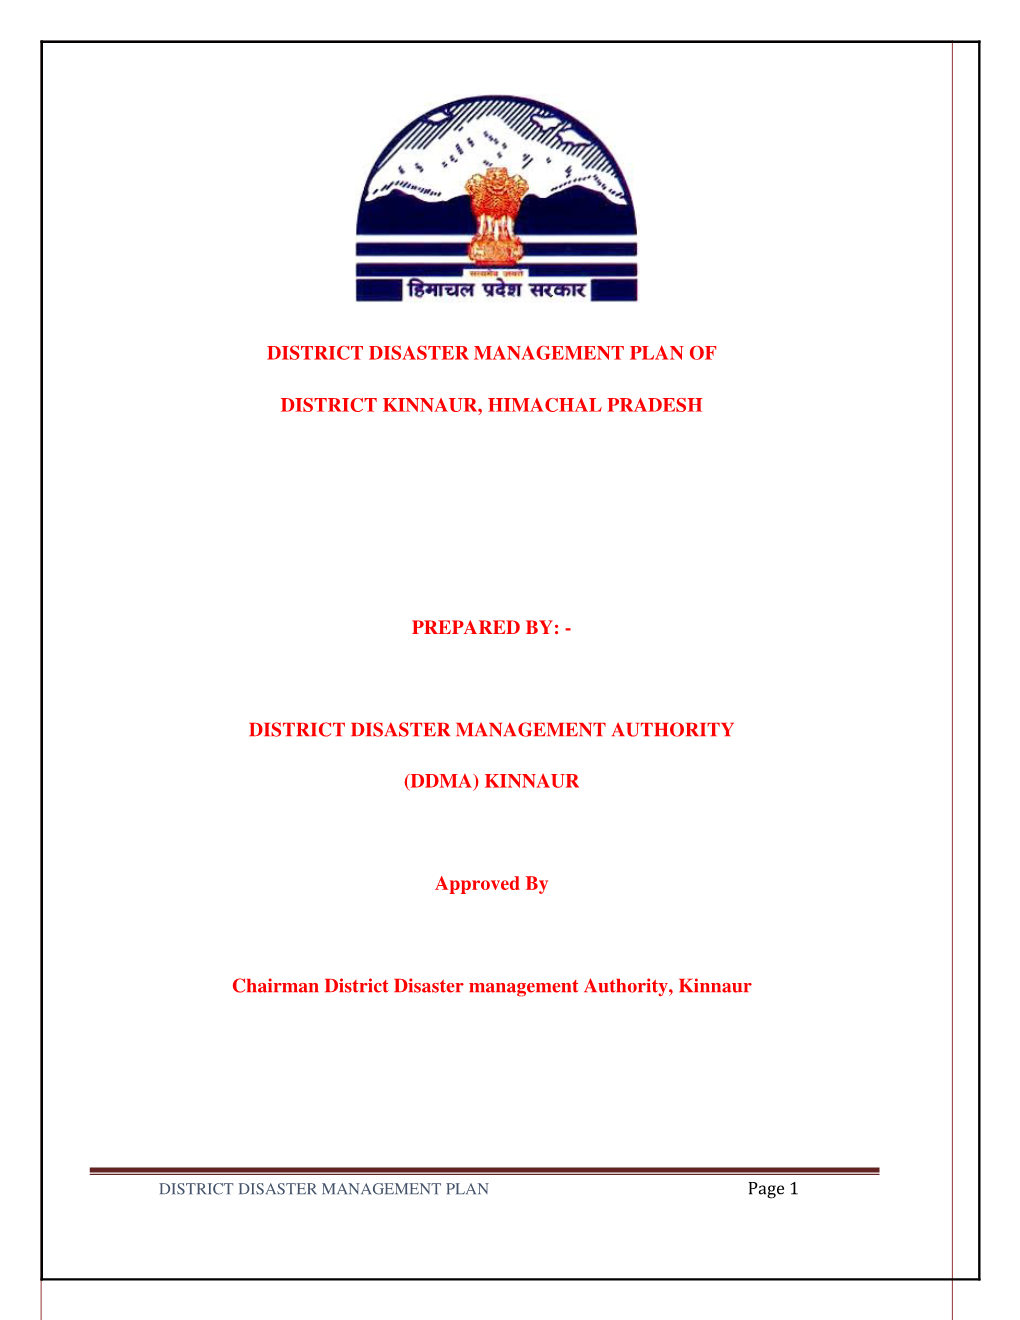 District Disaster Management Plan of District Kinnaur